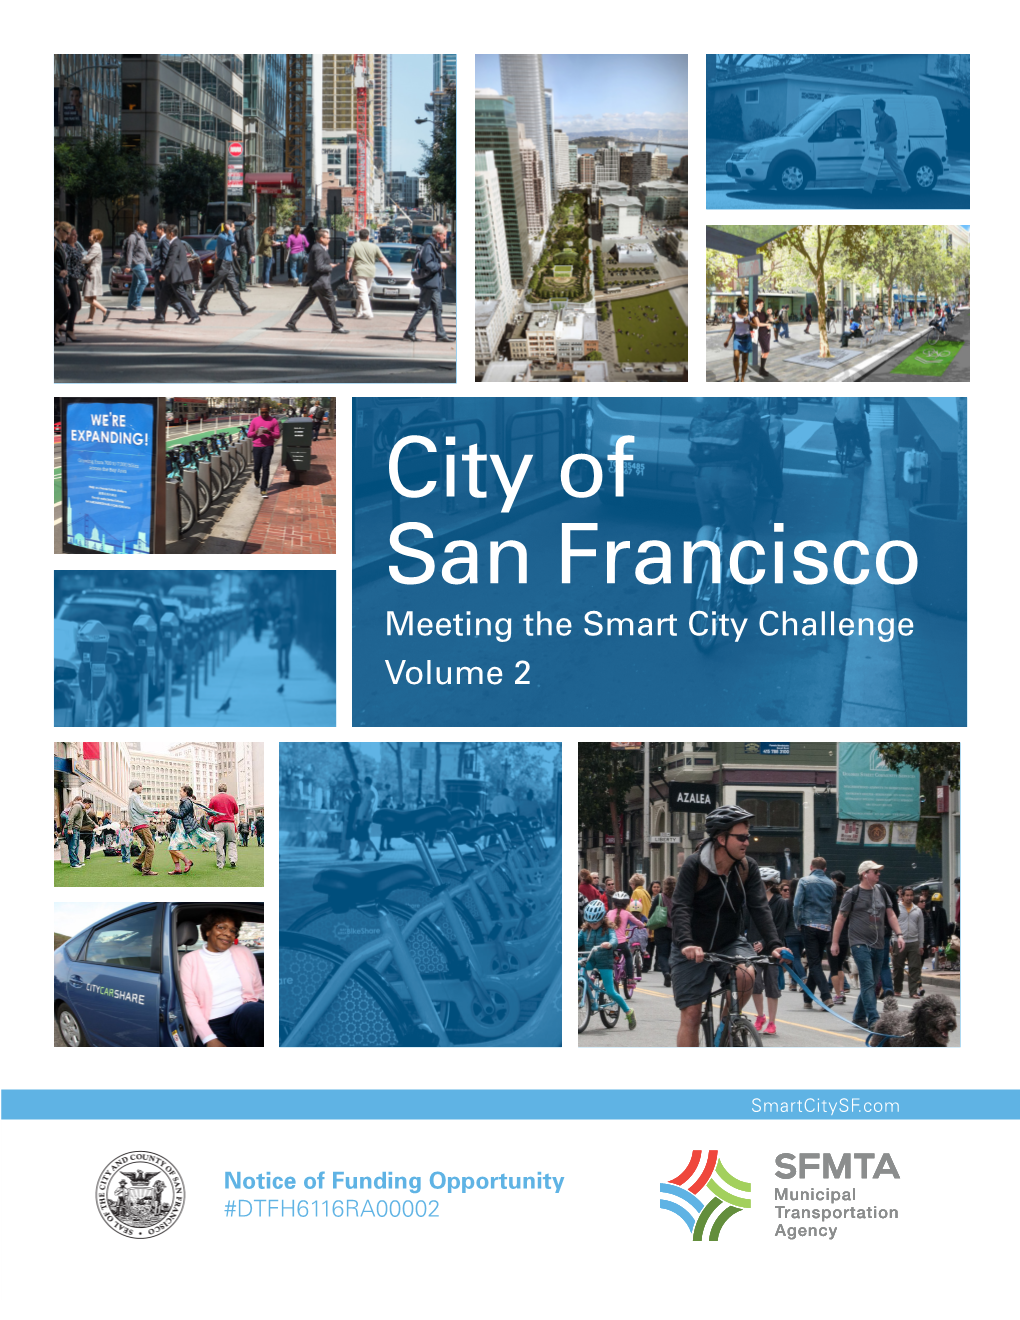 City of San Francisco Meeting the Smart City Challenge Volume 2